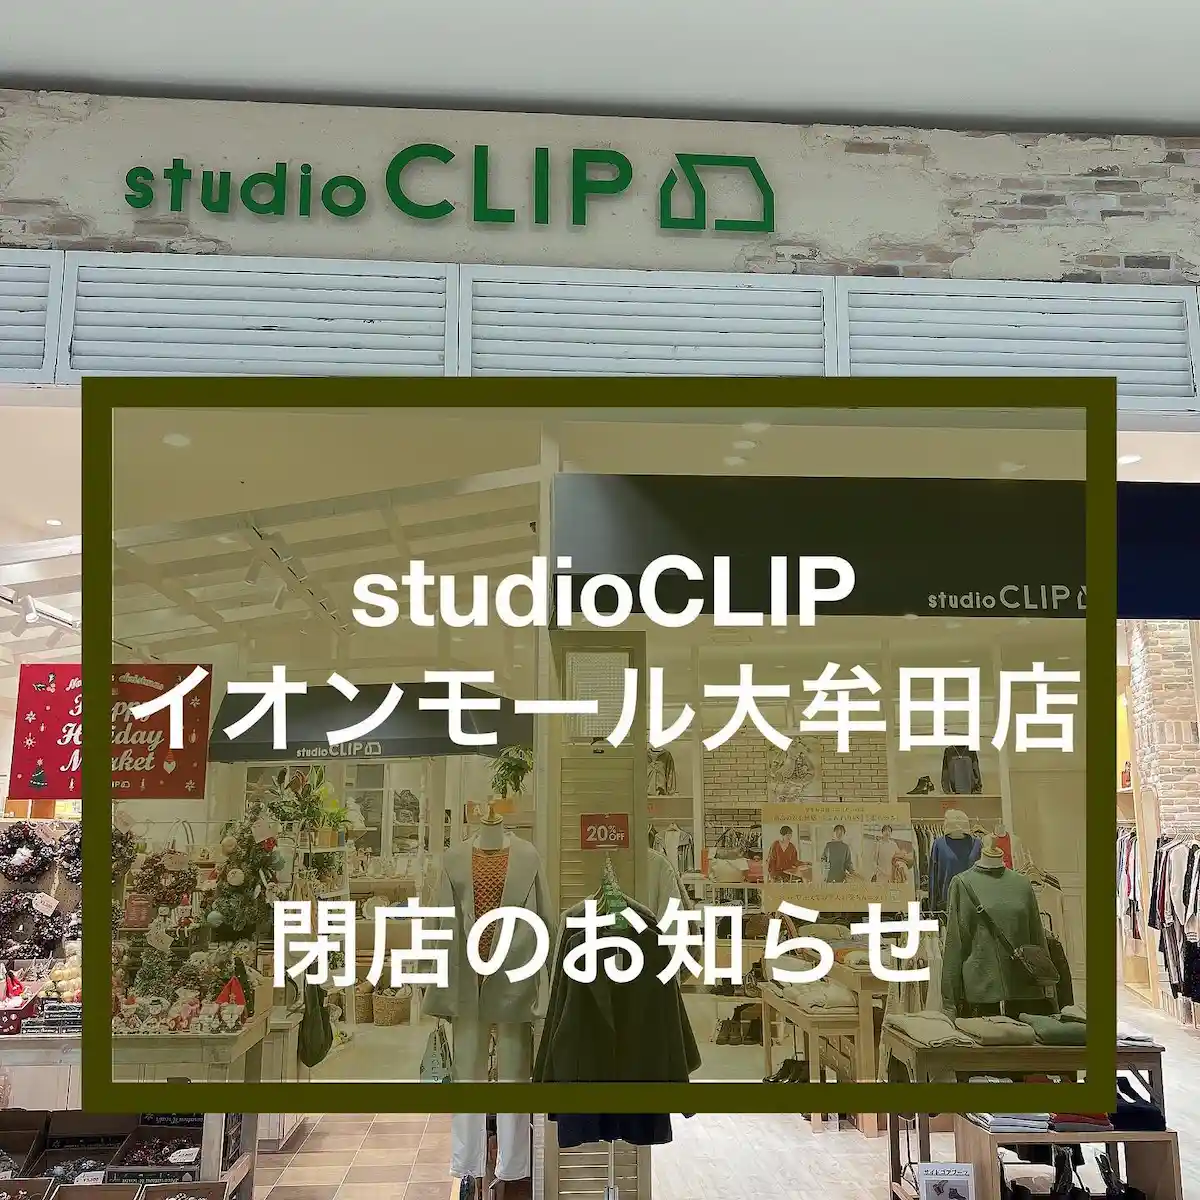 studio CLIP イオンモール大牟田店が11月30日をもって閉店するみたい。ウィメンズアパレルや雑貨などの店